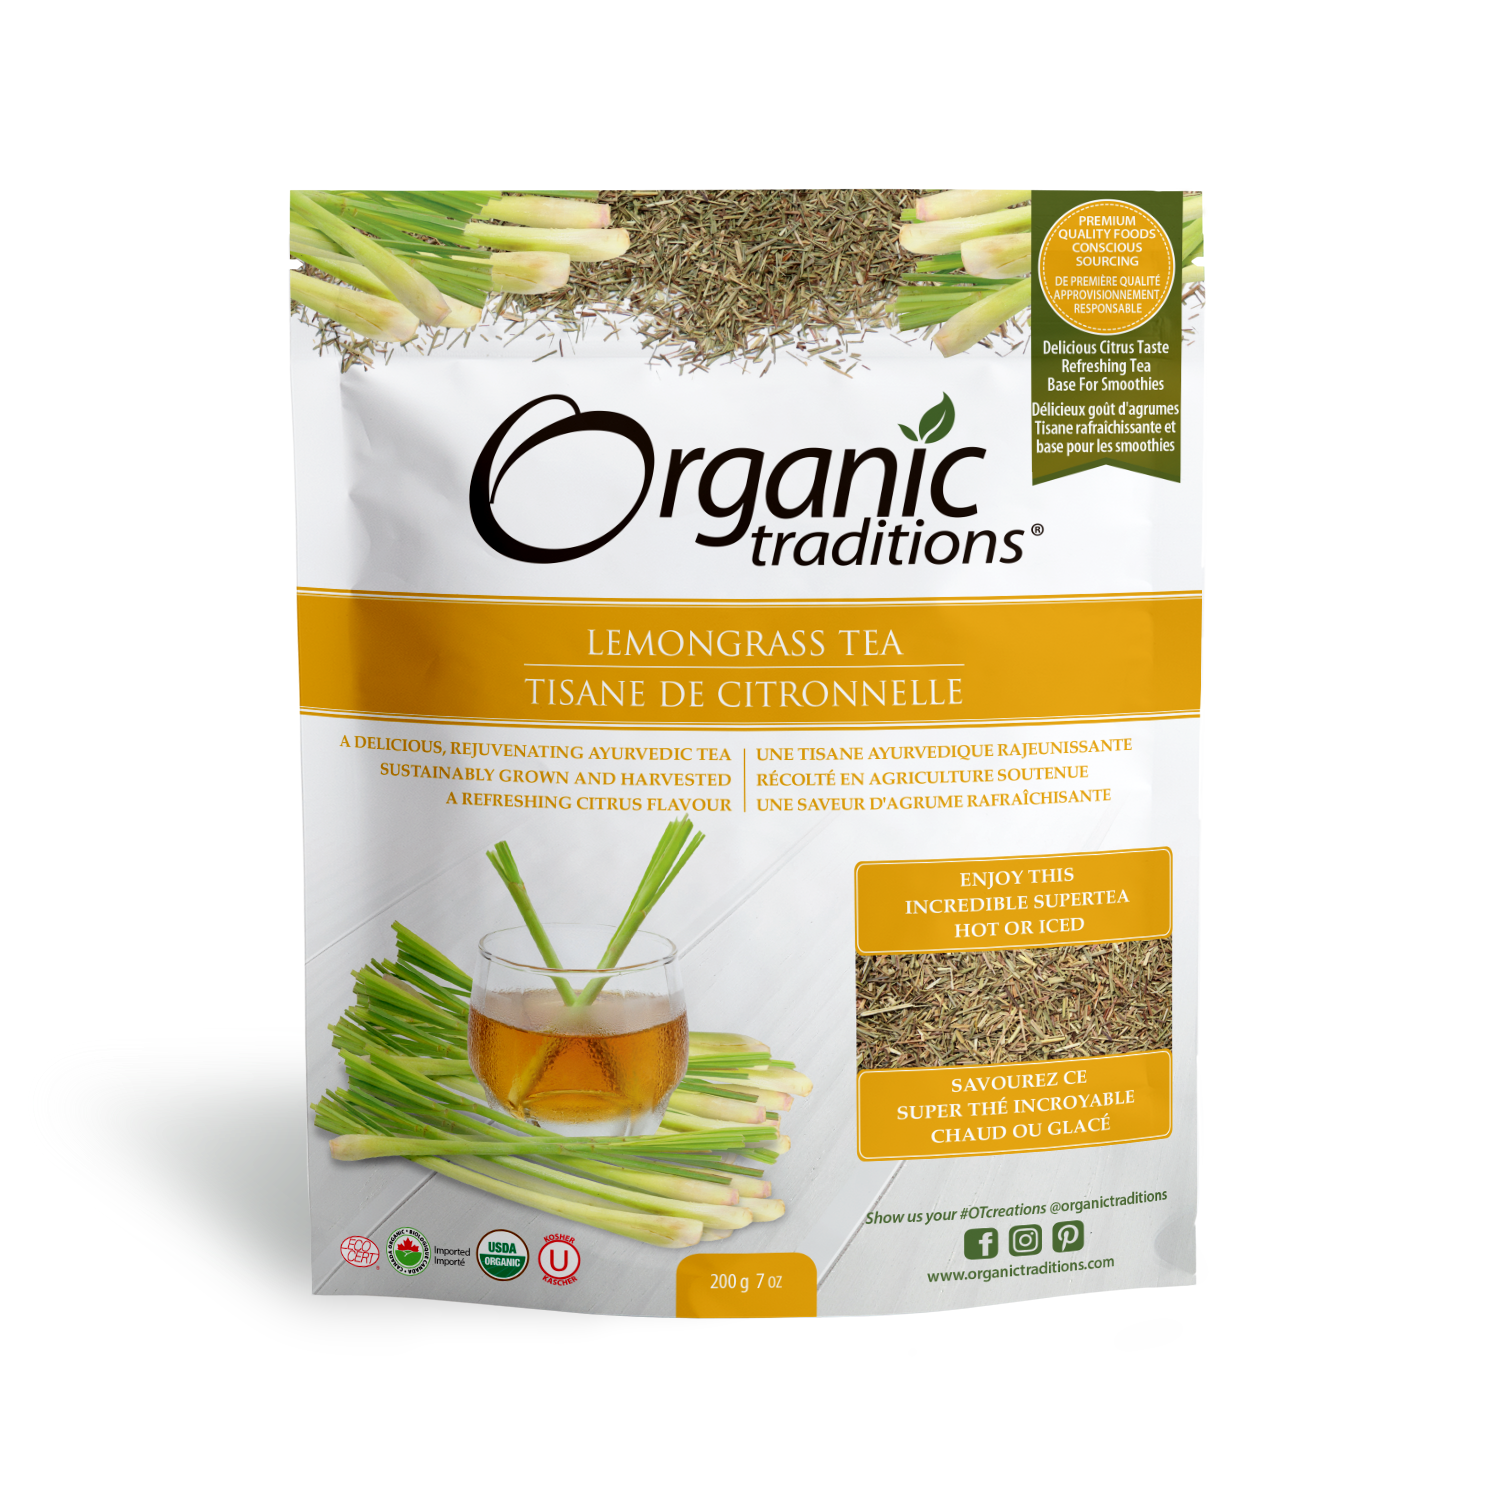 Organic Lemongrass Tea Cut